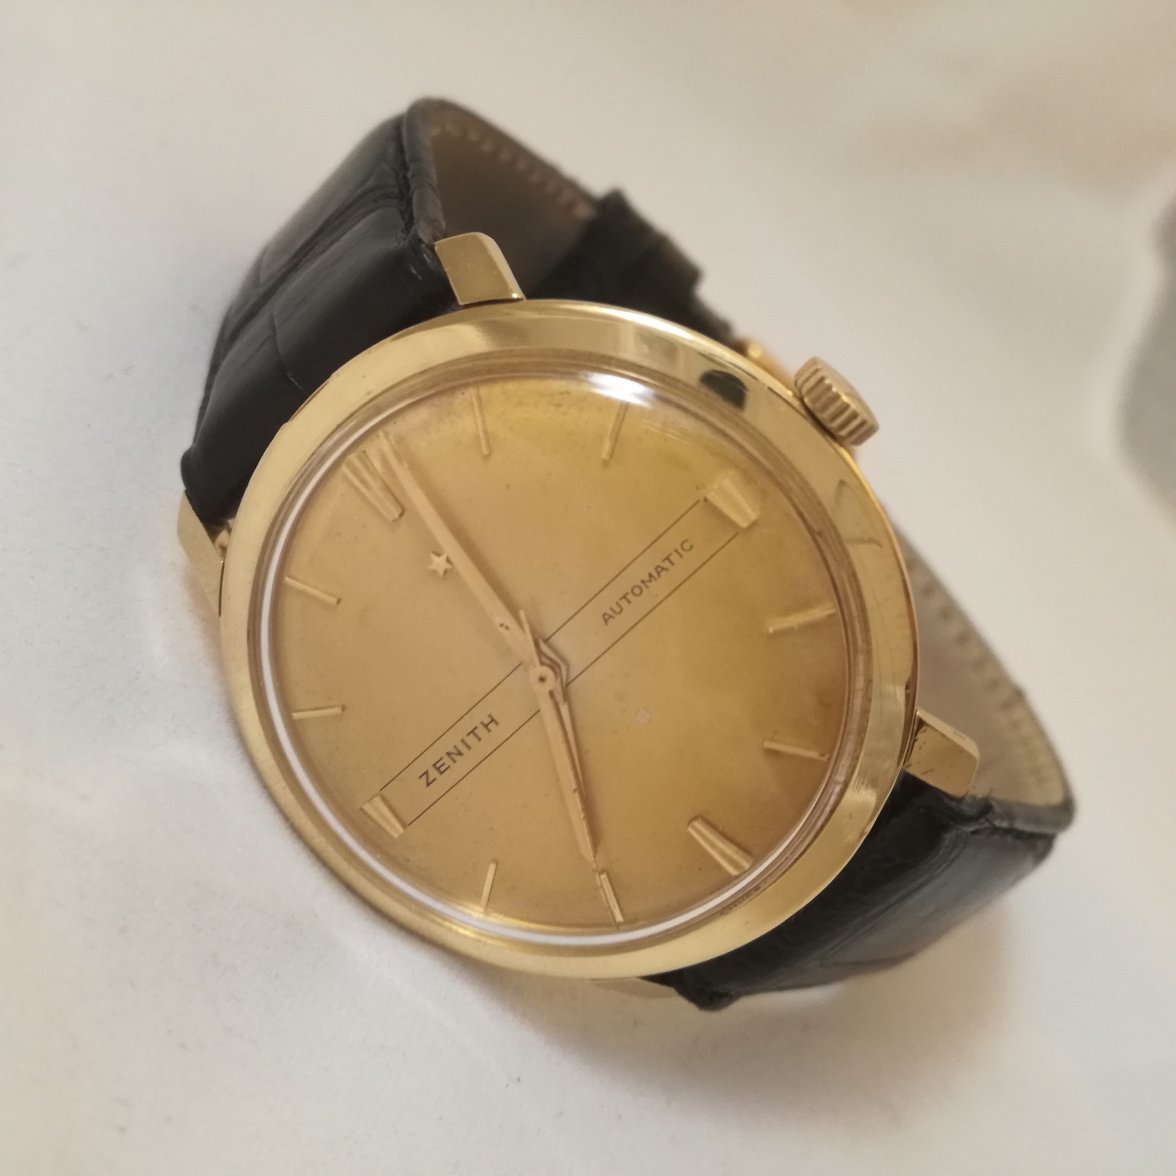 Help identifying a watch.